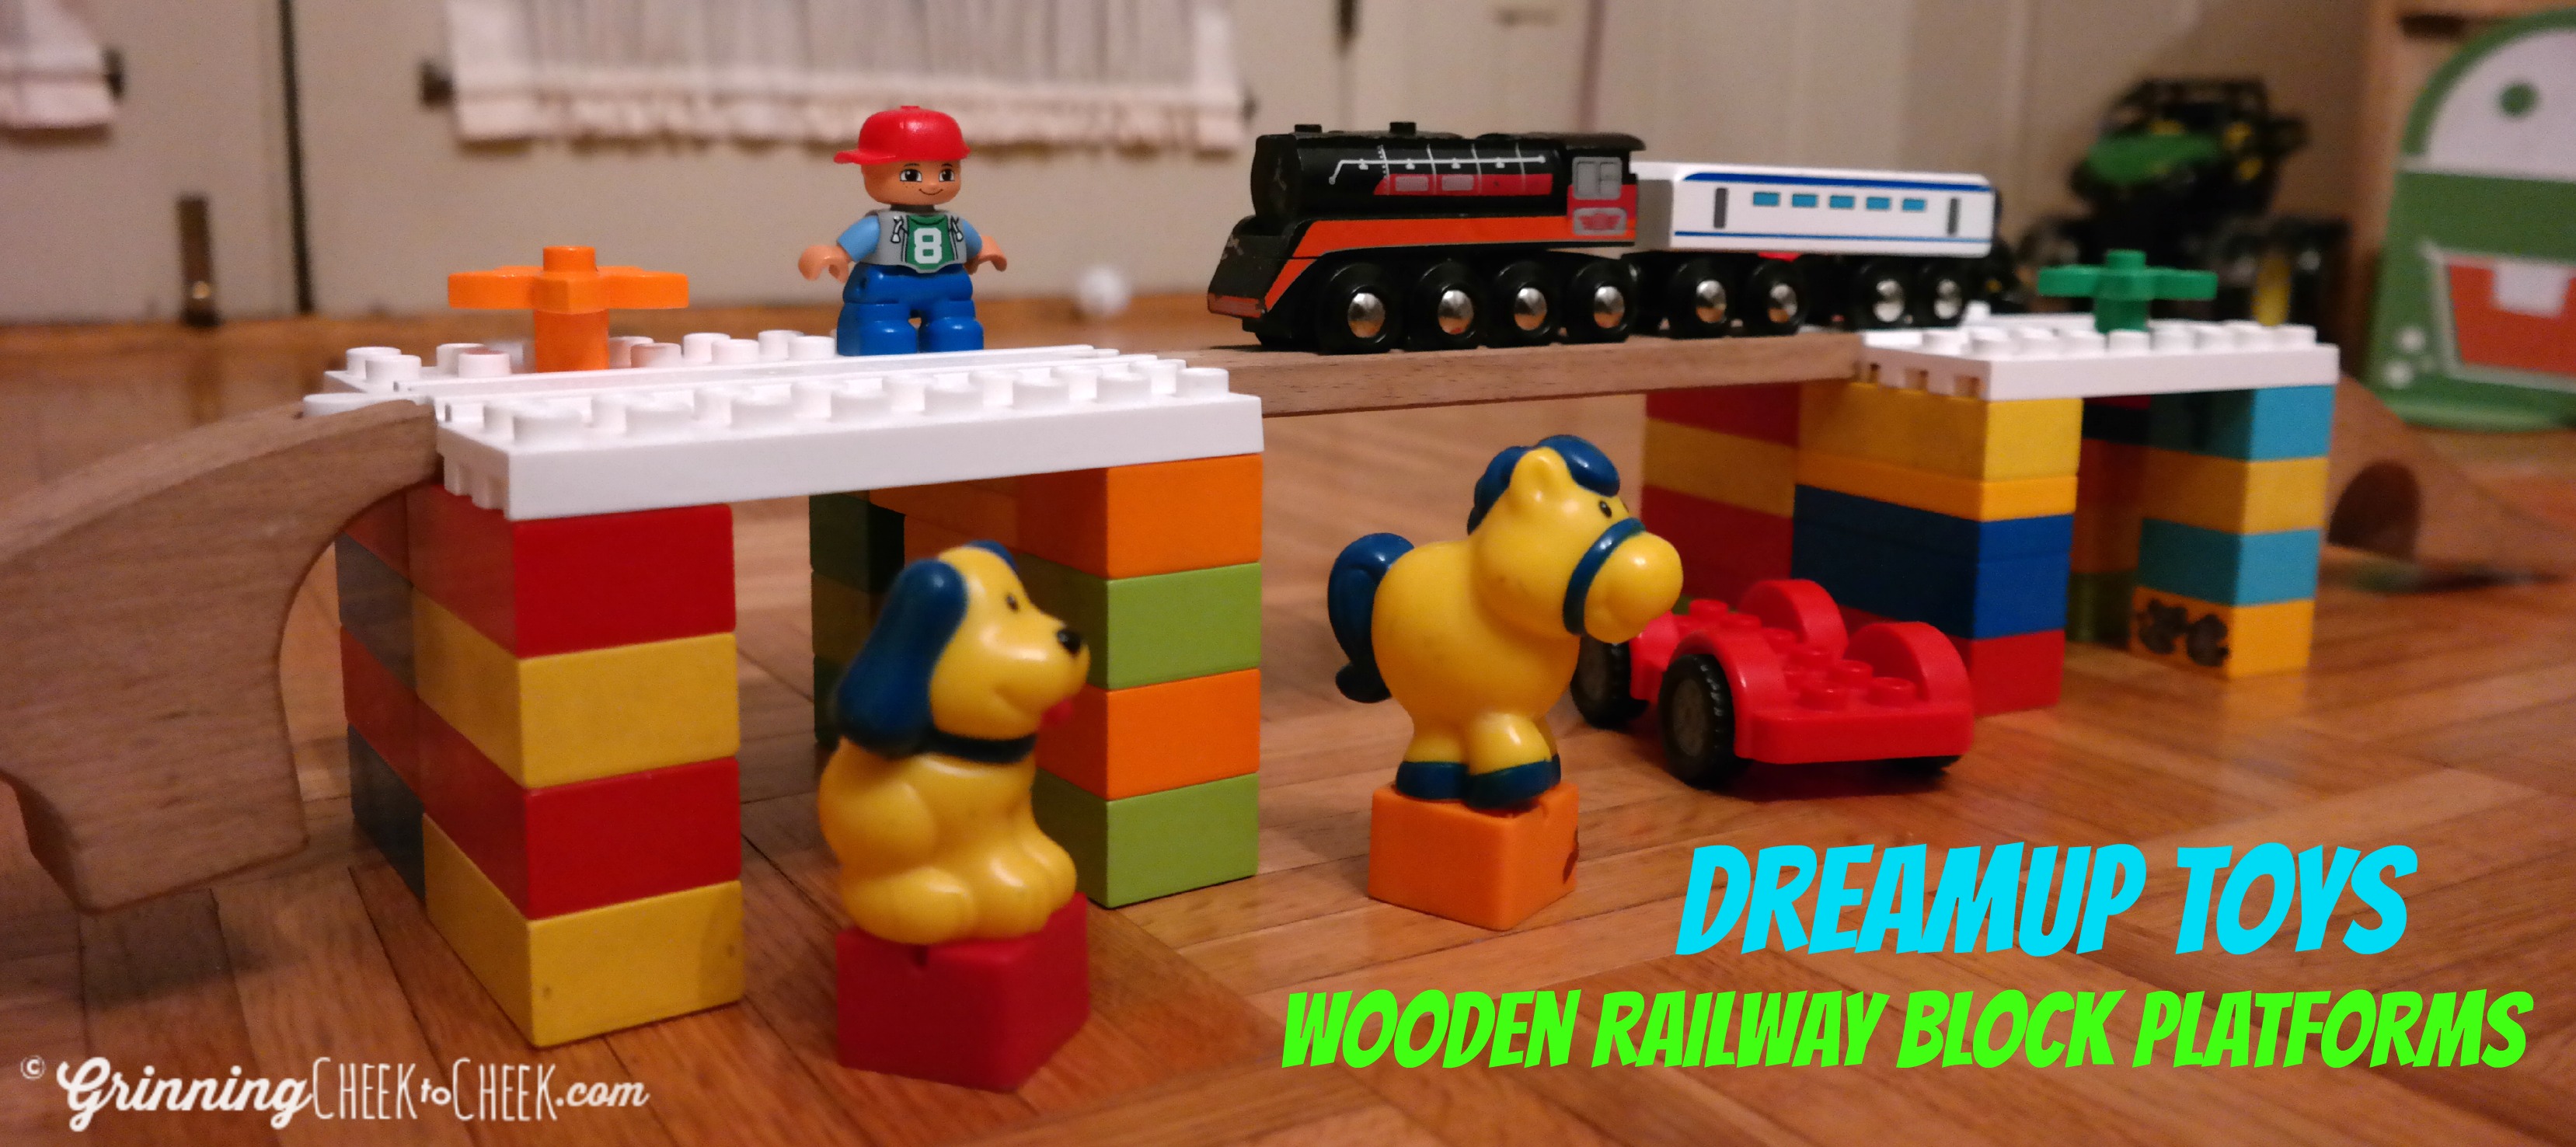 DreamUp Toys Wooden Railway Block Platforms #Christmas